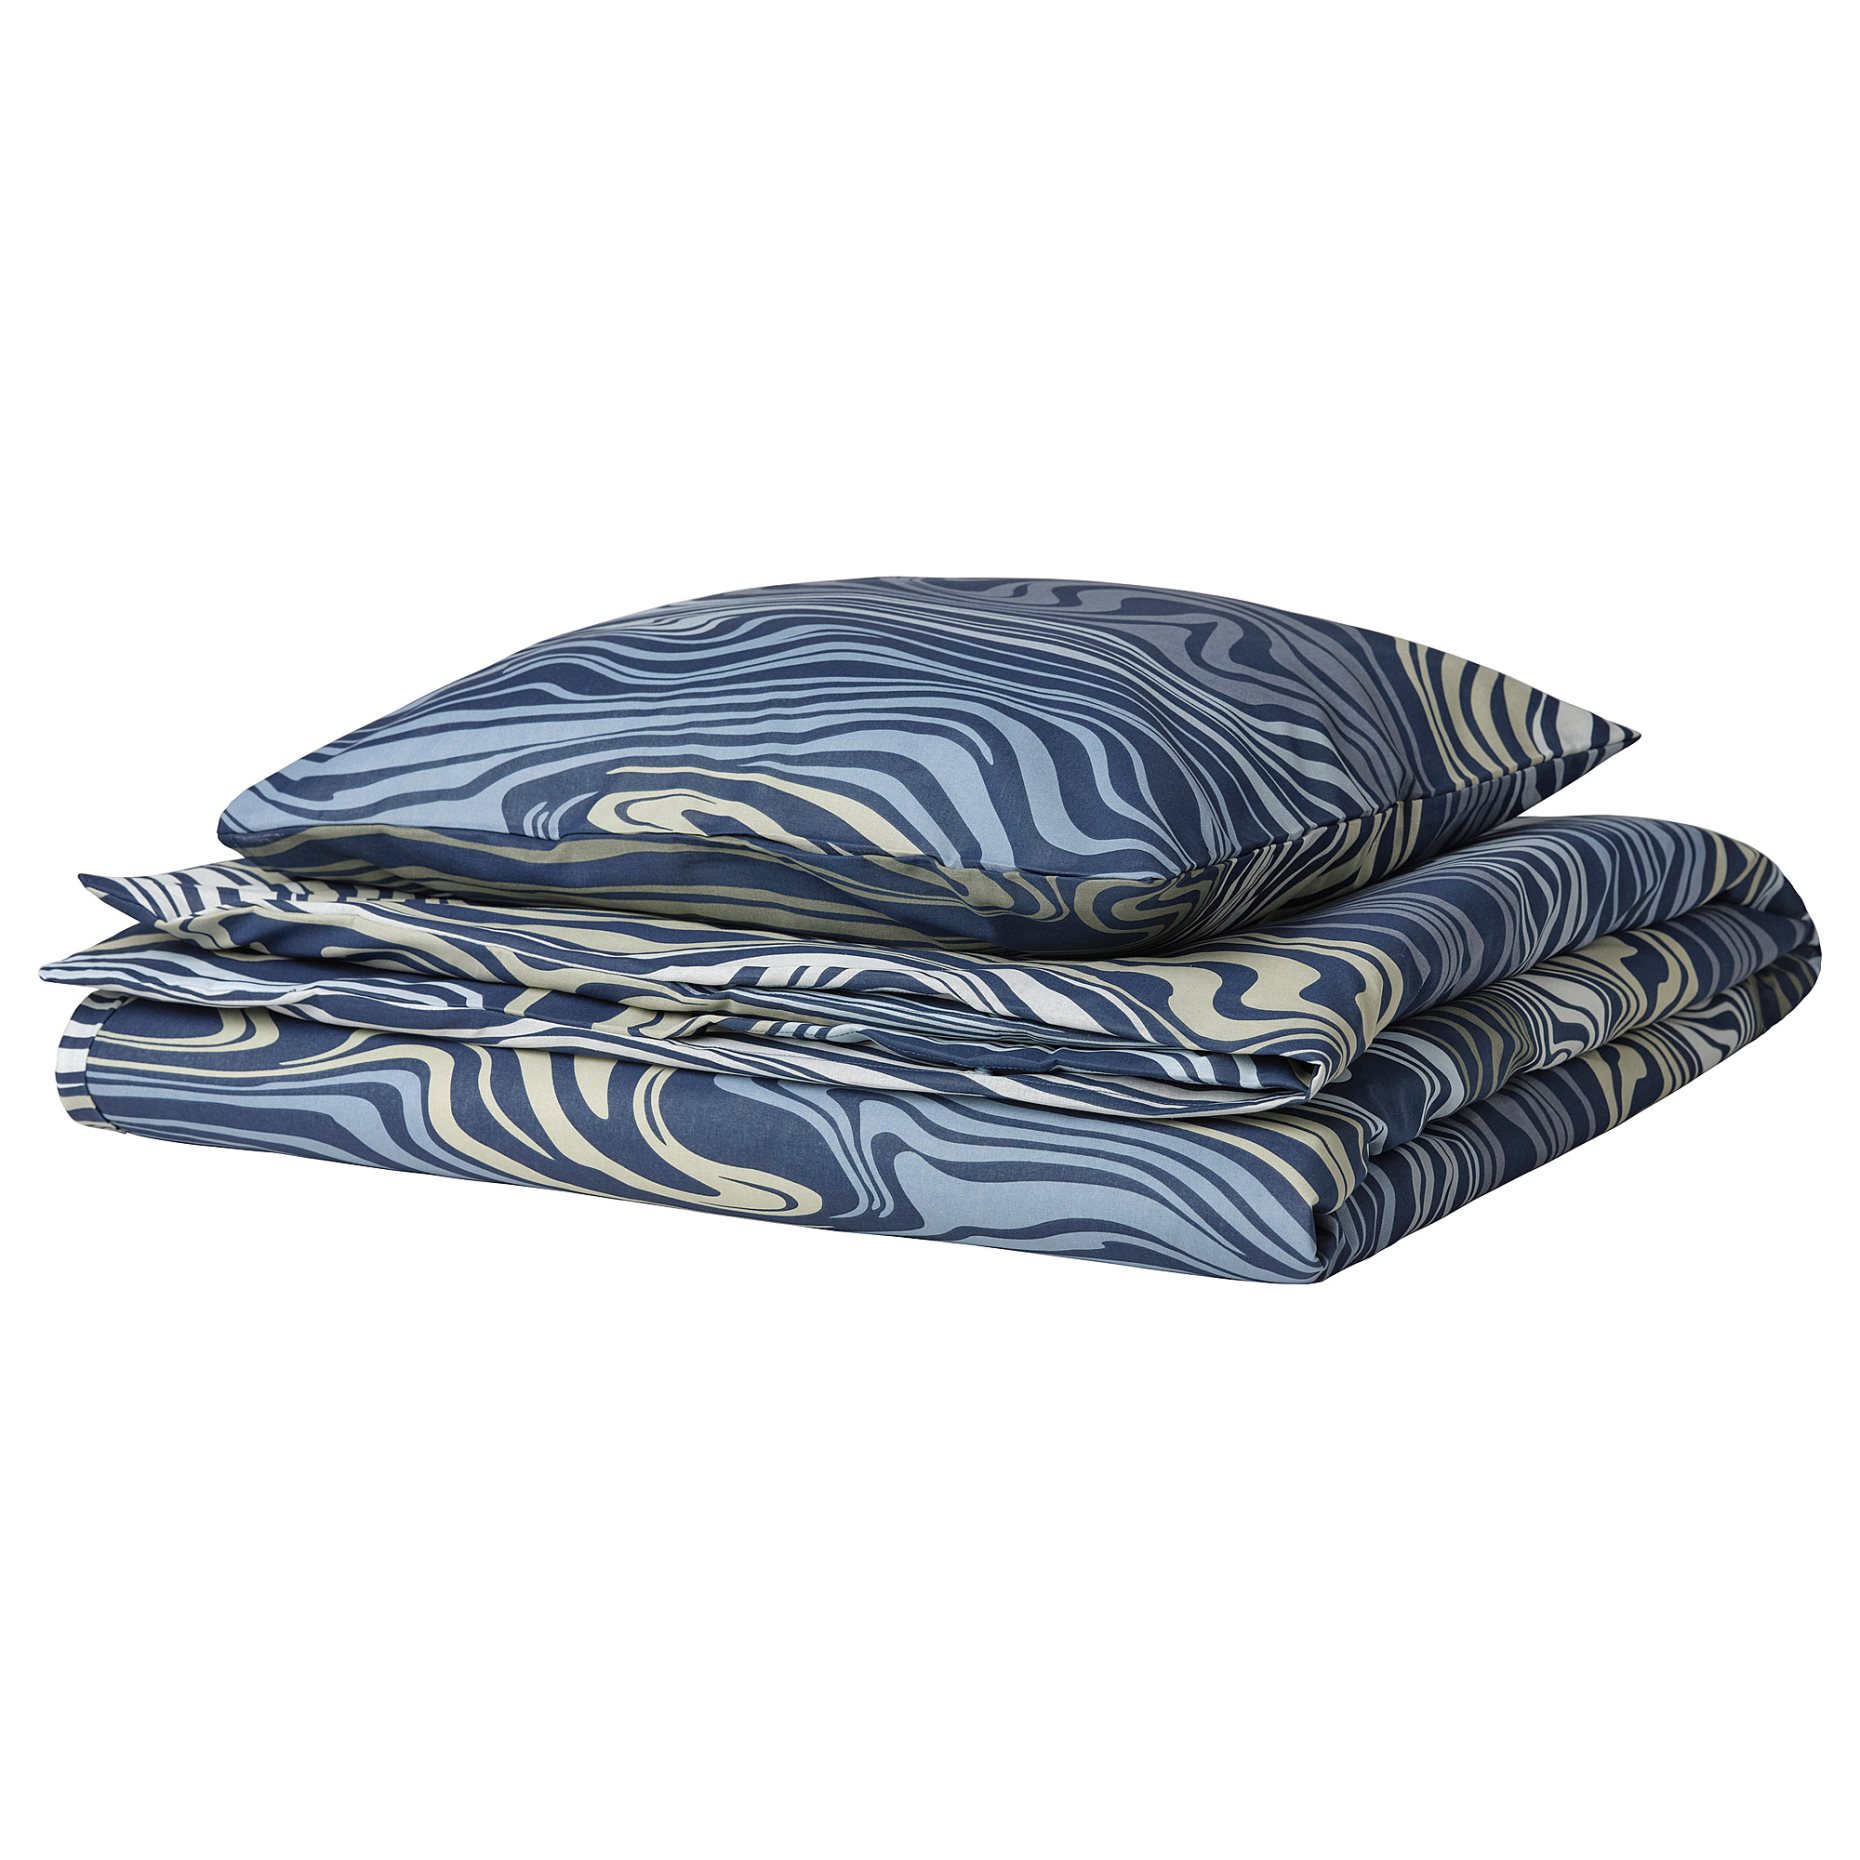 KLIPPNEJLIKA, duvet cover and pillowcase, 150x200/50x60 cm, 205.700.80